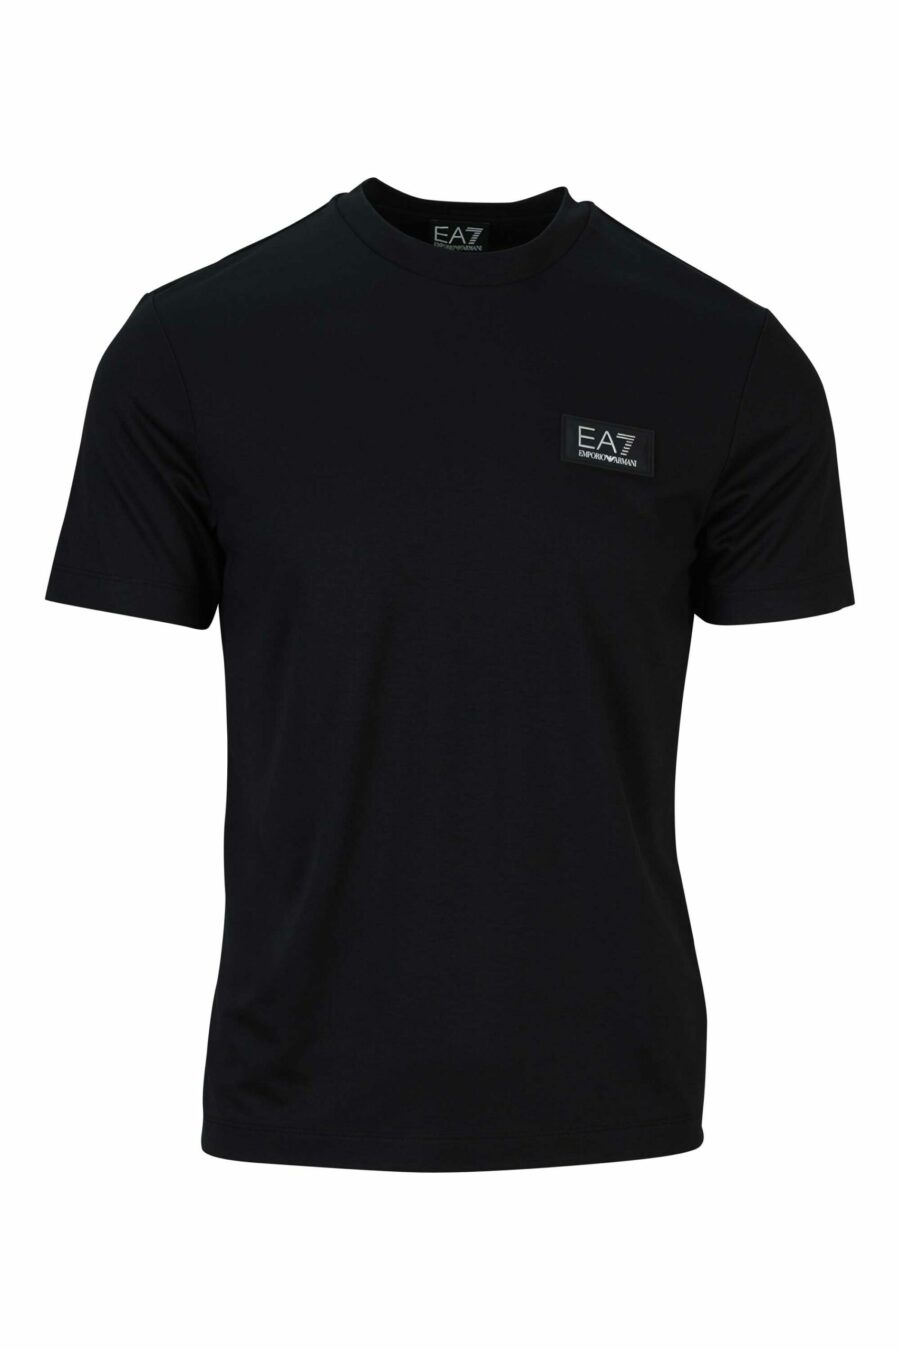 Camiseta negra "oversize" con minilogo "lux identity" blanco en placa negra - 8058947508570 1 scaled